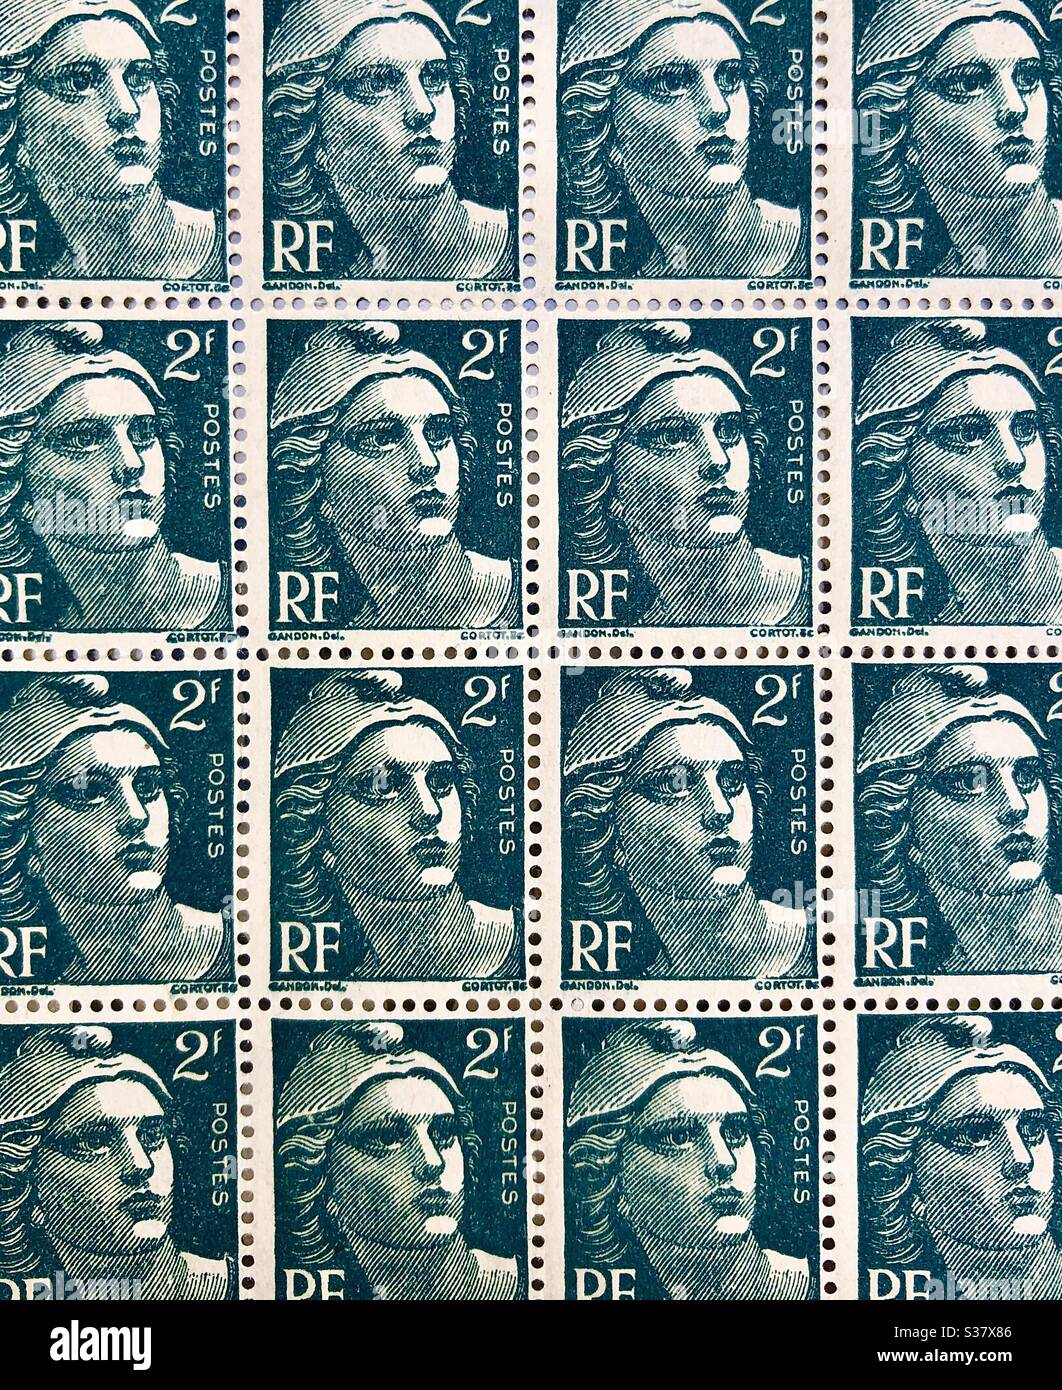 Bloque no utilizado de 1940 / 1950 "Marianne de Gandon" sello postal francés définitivo. Foto de stock